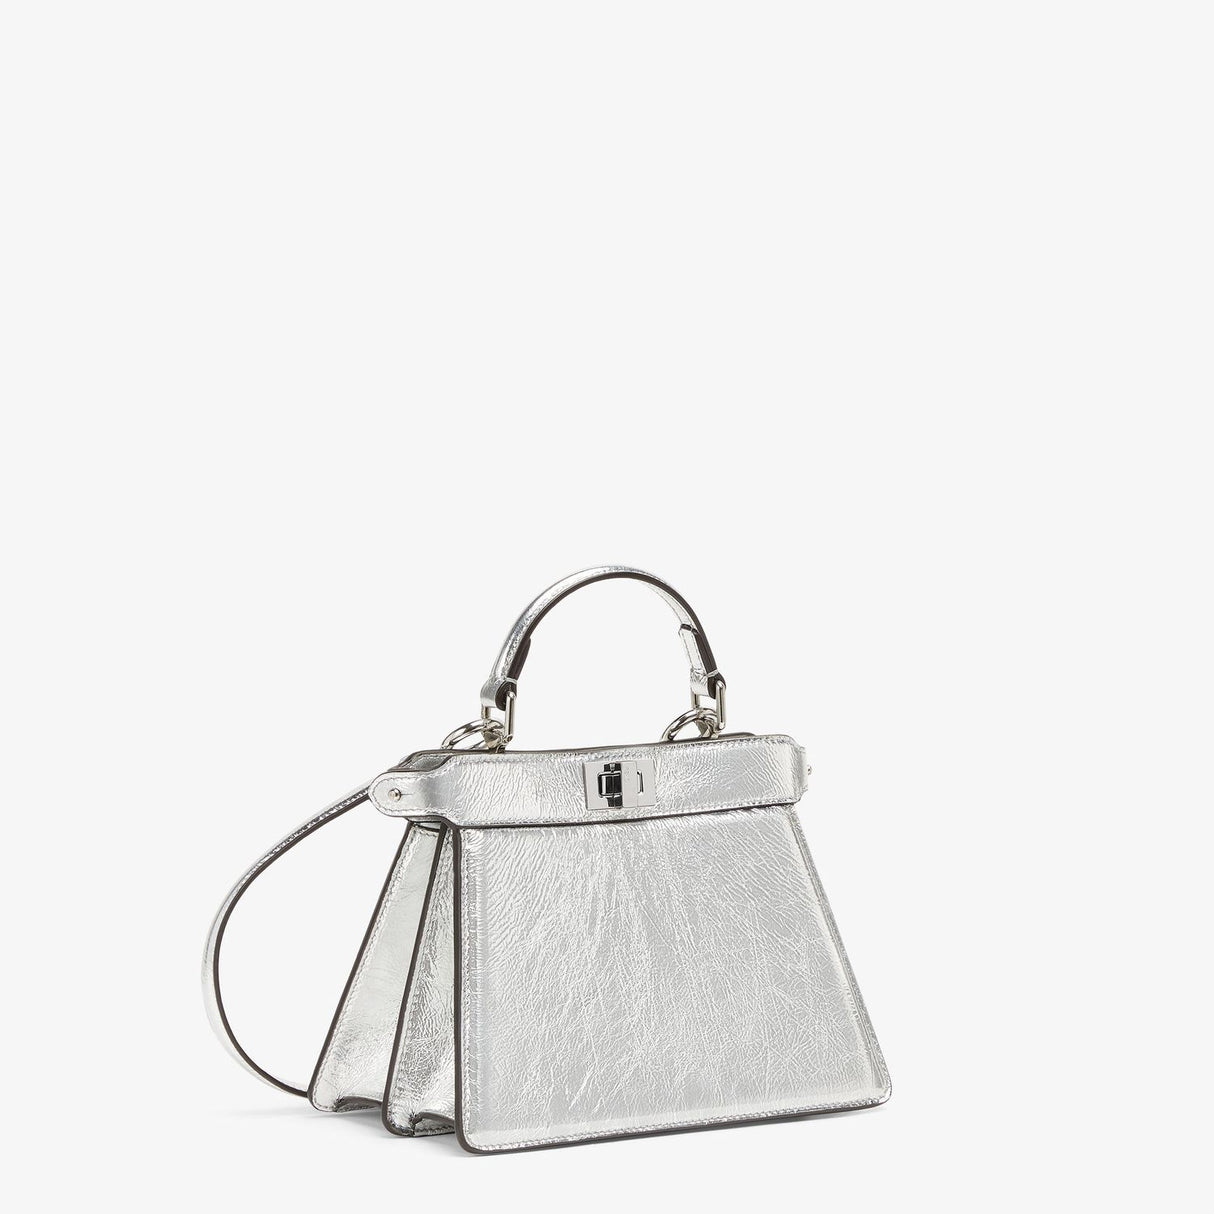 FENDI Silver Petite Peekaboo ISeeU Mini Handbag in 100% Lamb Leather for Women - Shoulder & Crossbody Option, FW23